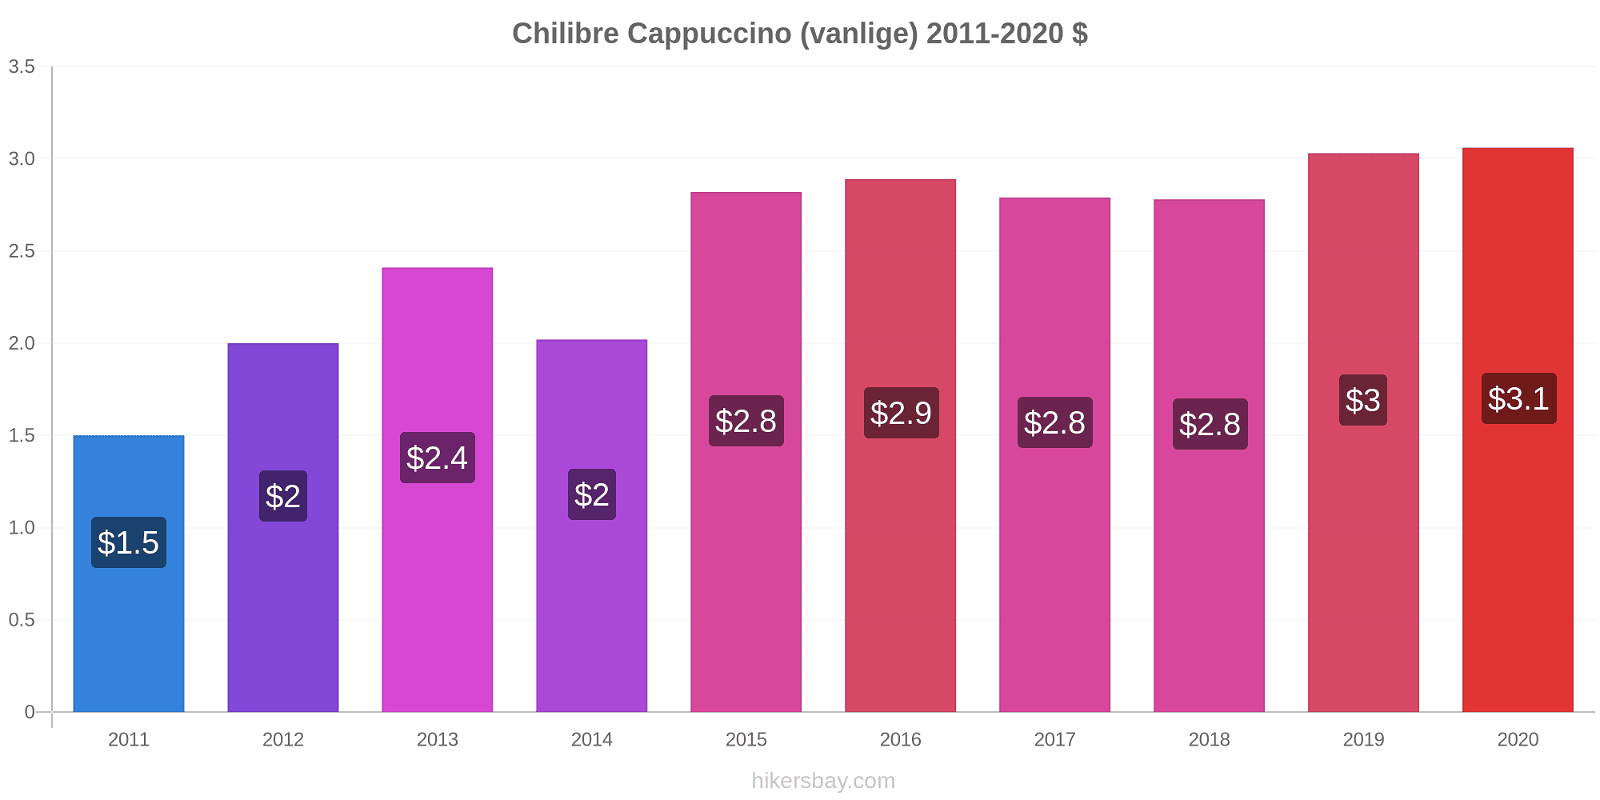 Chilibre prisendringer Cappuccino (vanlige) hikersbay.com